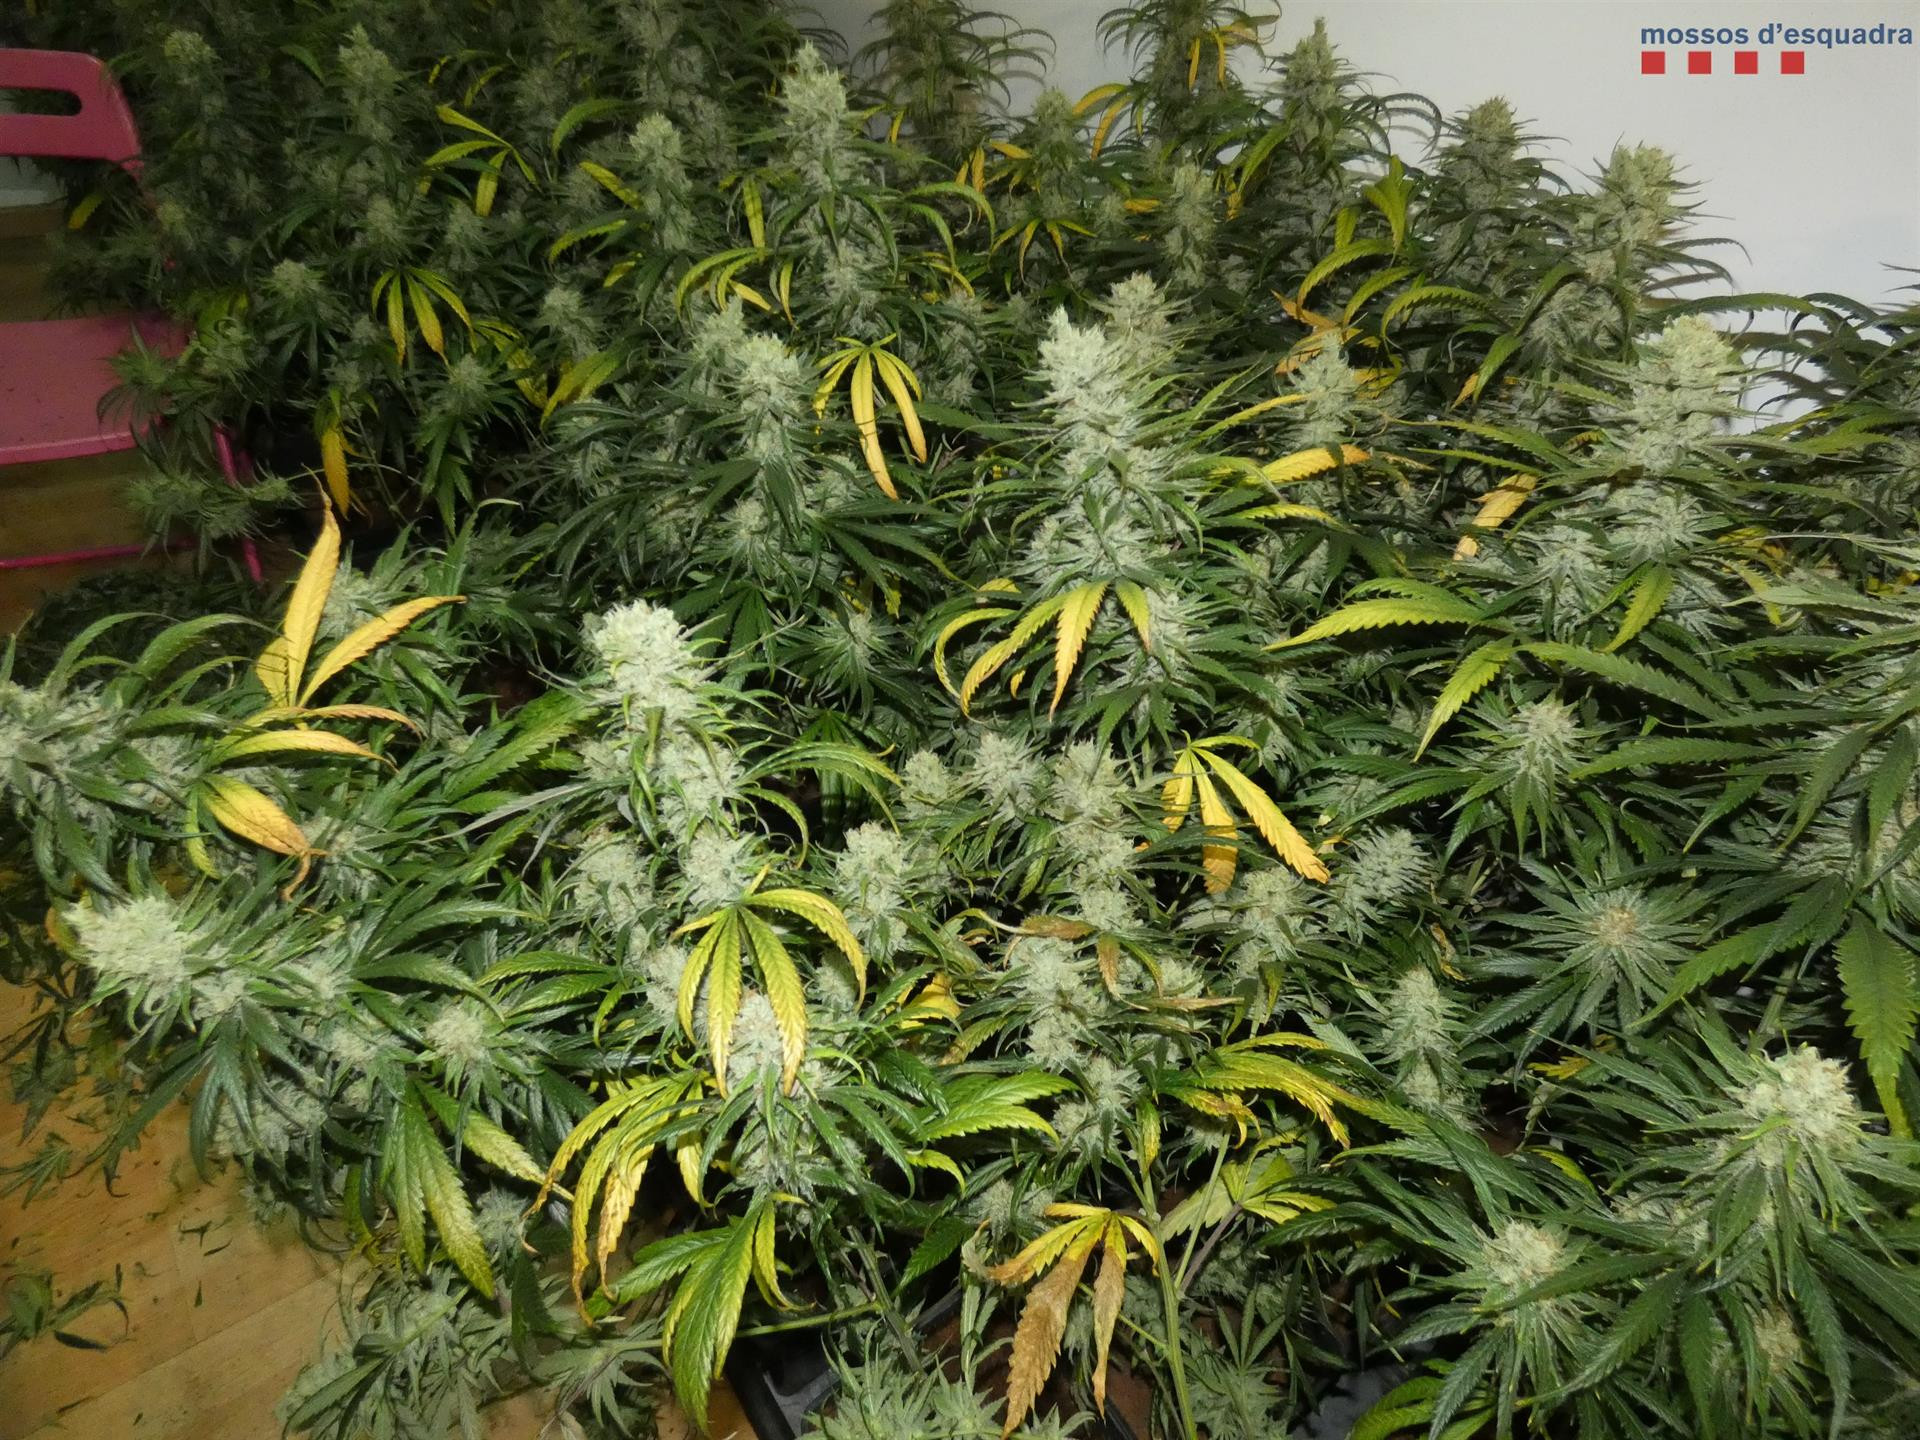 Plantación de marihuana con un sistema eléctrico sofisticado / MOSSOS D'ESQUADRA